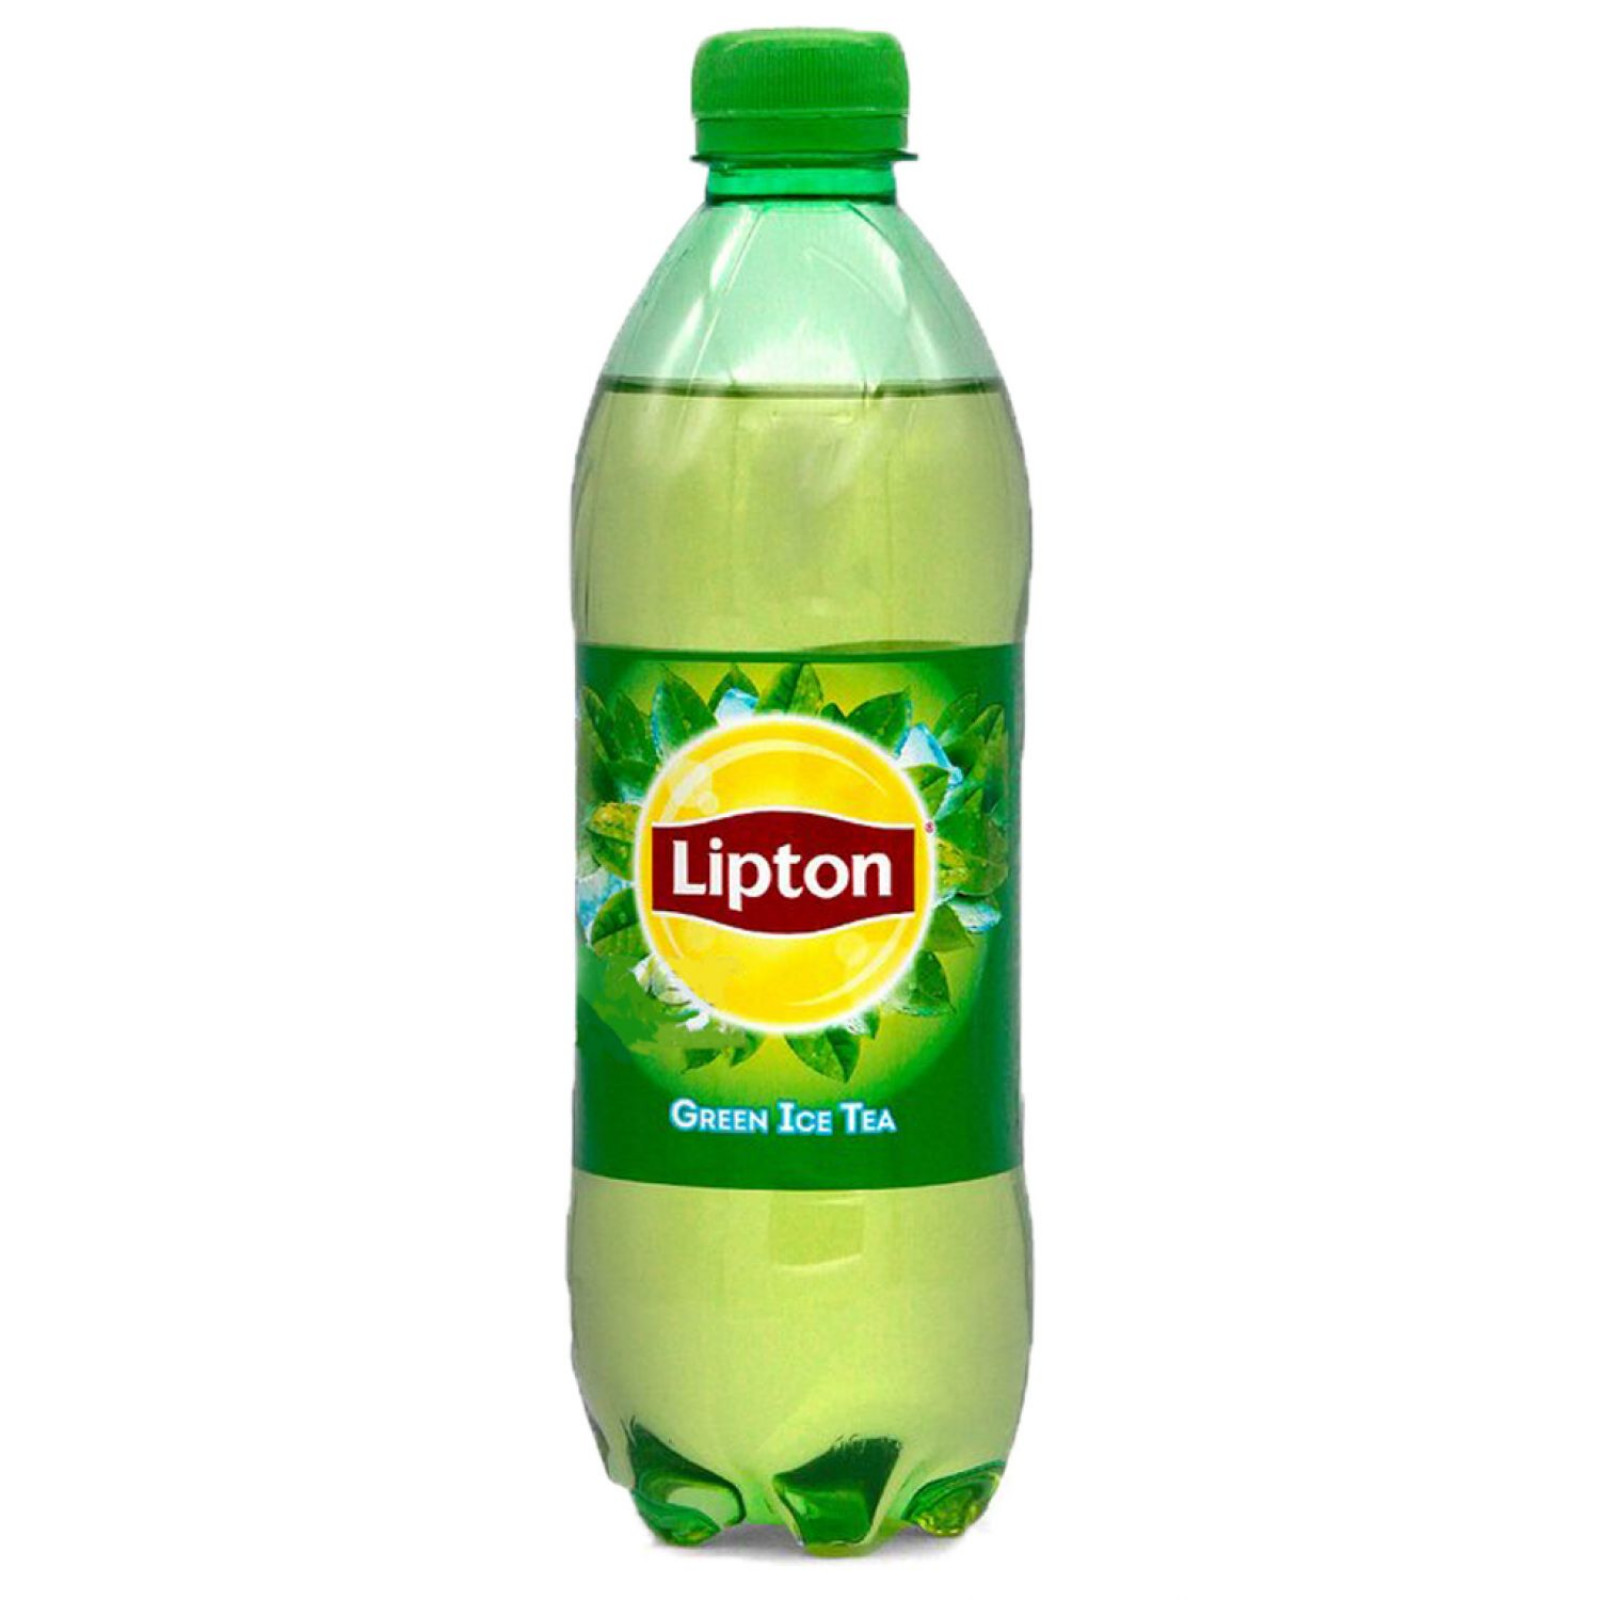 Бутылка зеленого липтона. Чай Липтон зеленый 0.5л. Чай Липтон зеленый чай 0,5. Холодный чай Липтон 0,5. Липтон холодный чай зеленый 0.5.